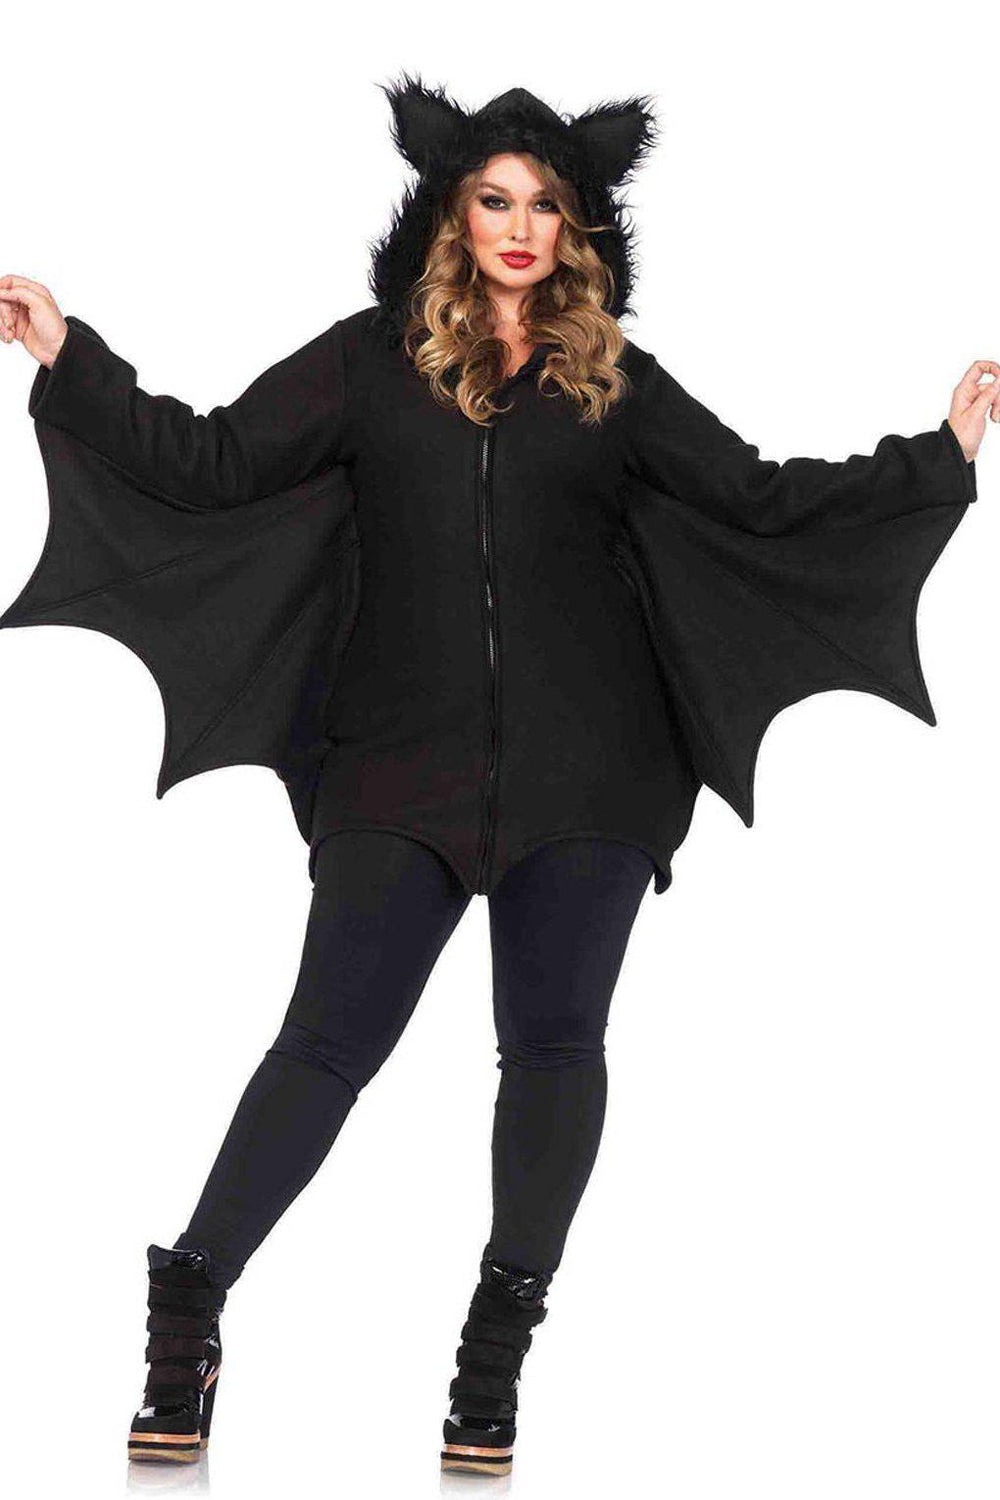 Plus Size Sexy Bat Costume Dress-Animal Costumes-Leg Avenue-SEXYSHOES.COM